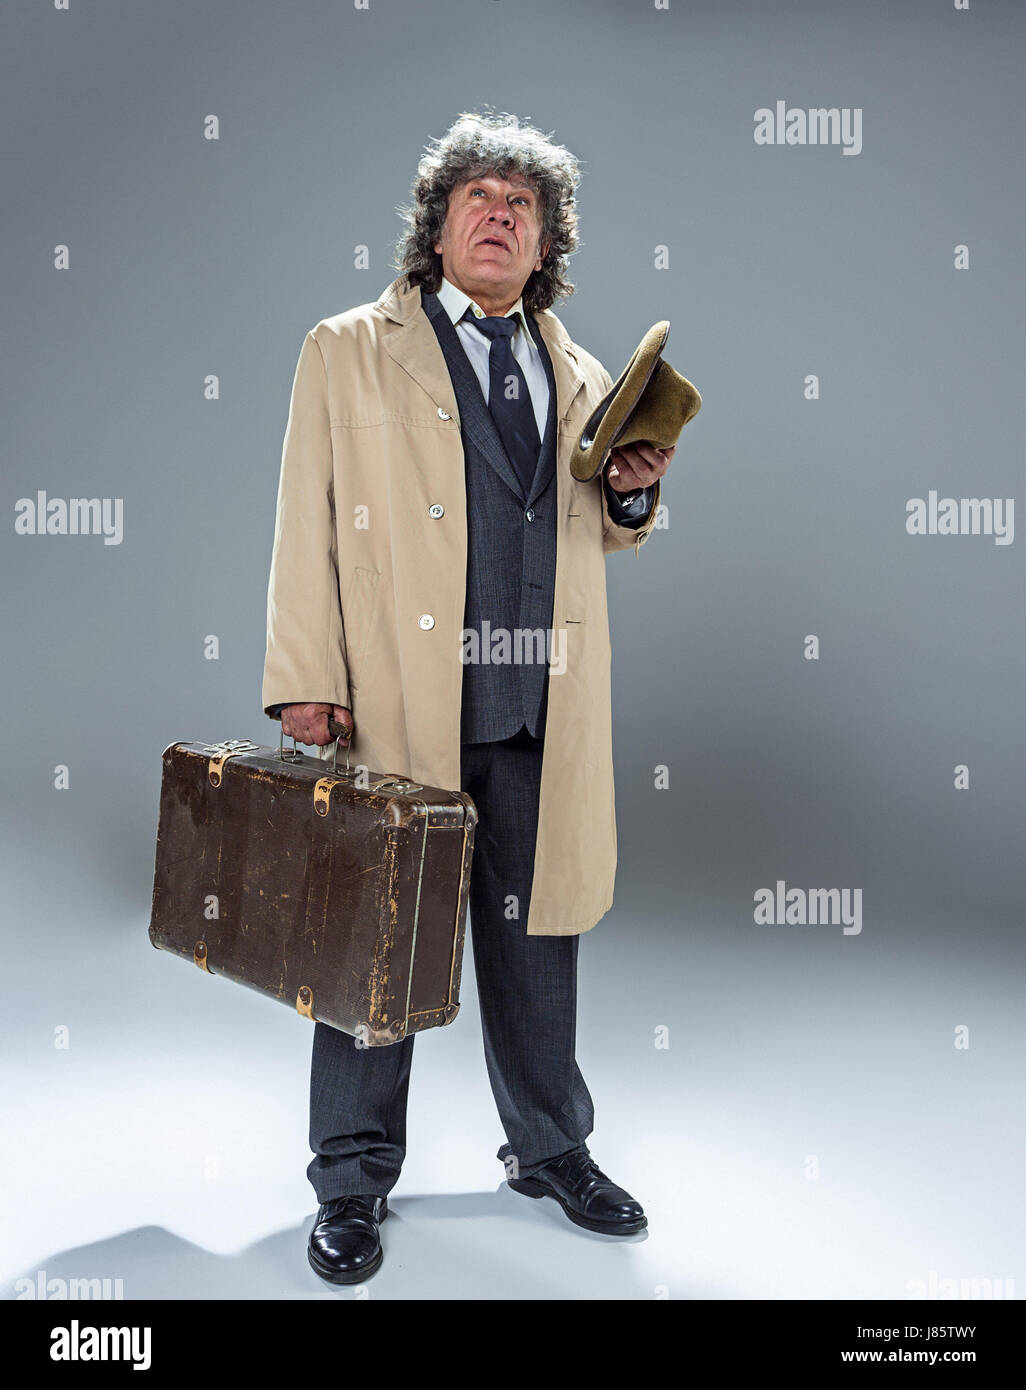 The senior man as detective or boss of mafia on gray studio background Stock Photo